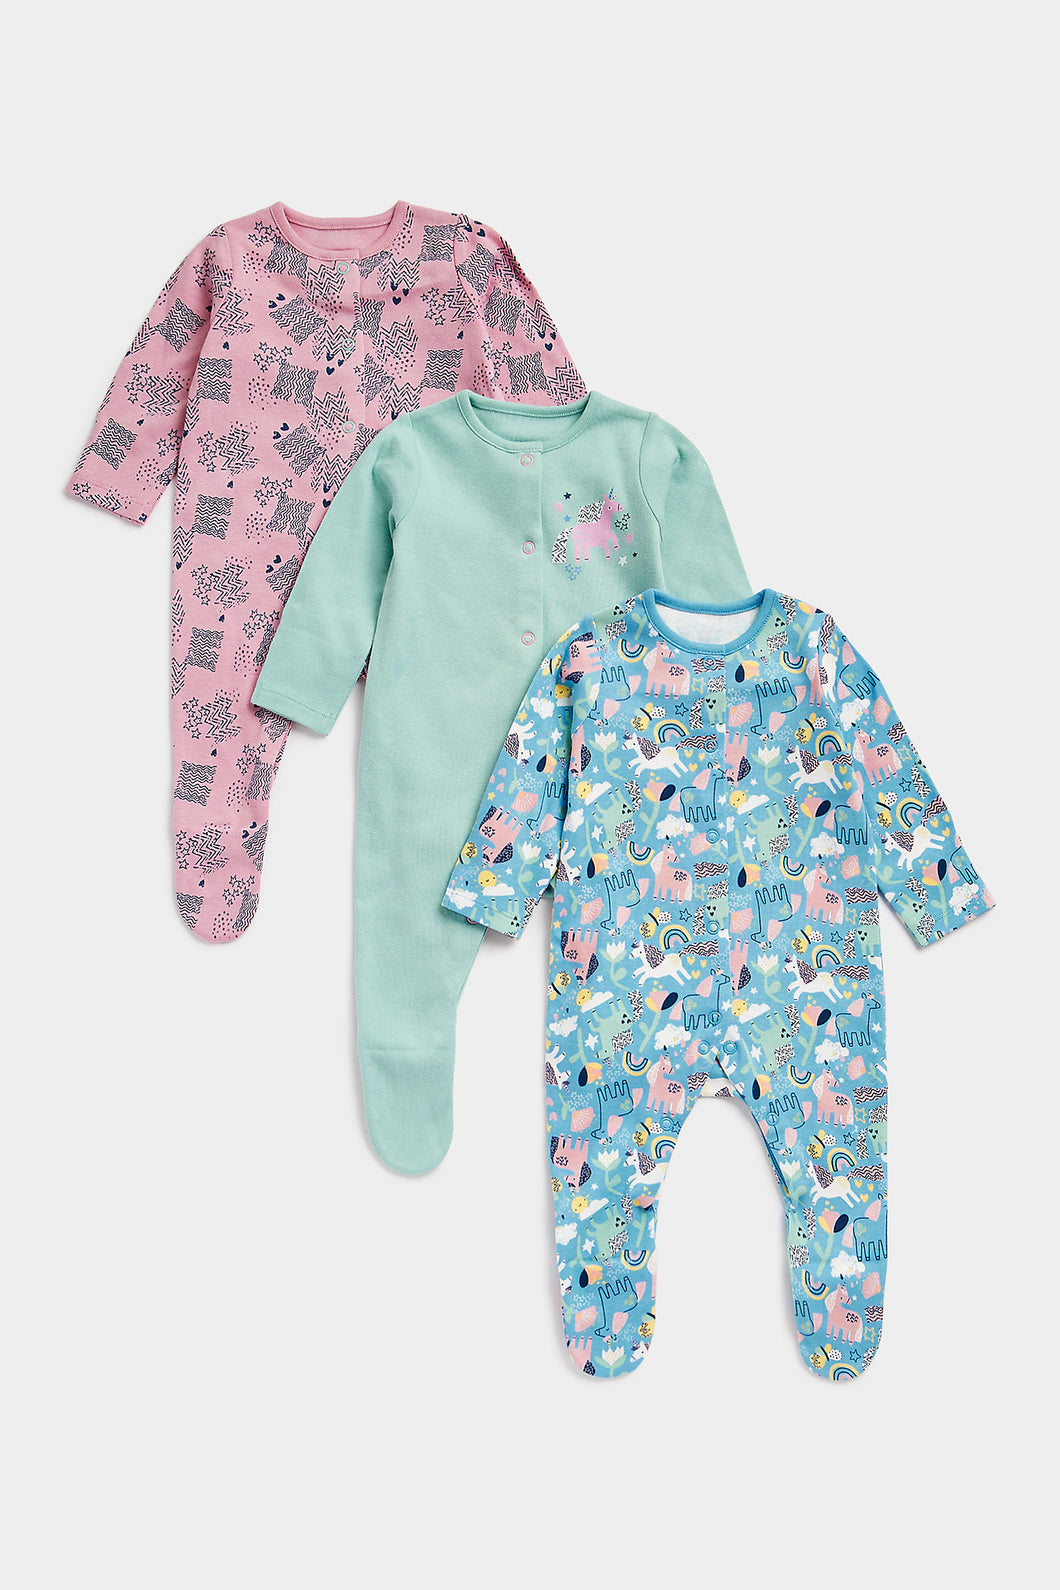 Mothercare Unicorn Sleepsuits - 3 Pack